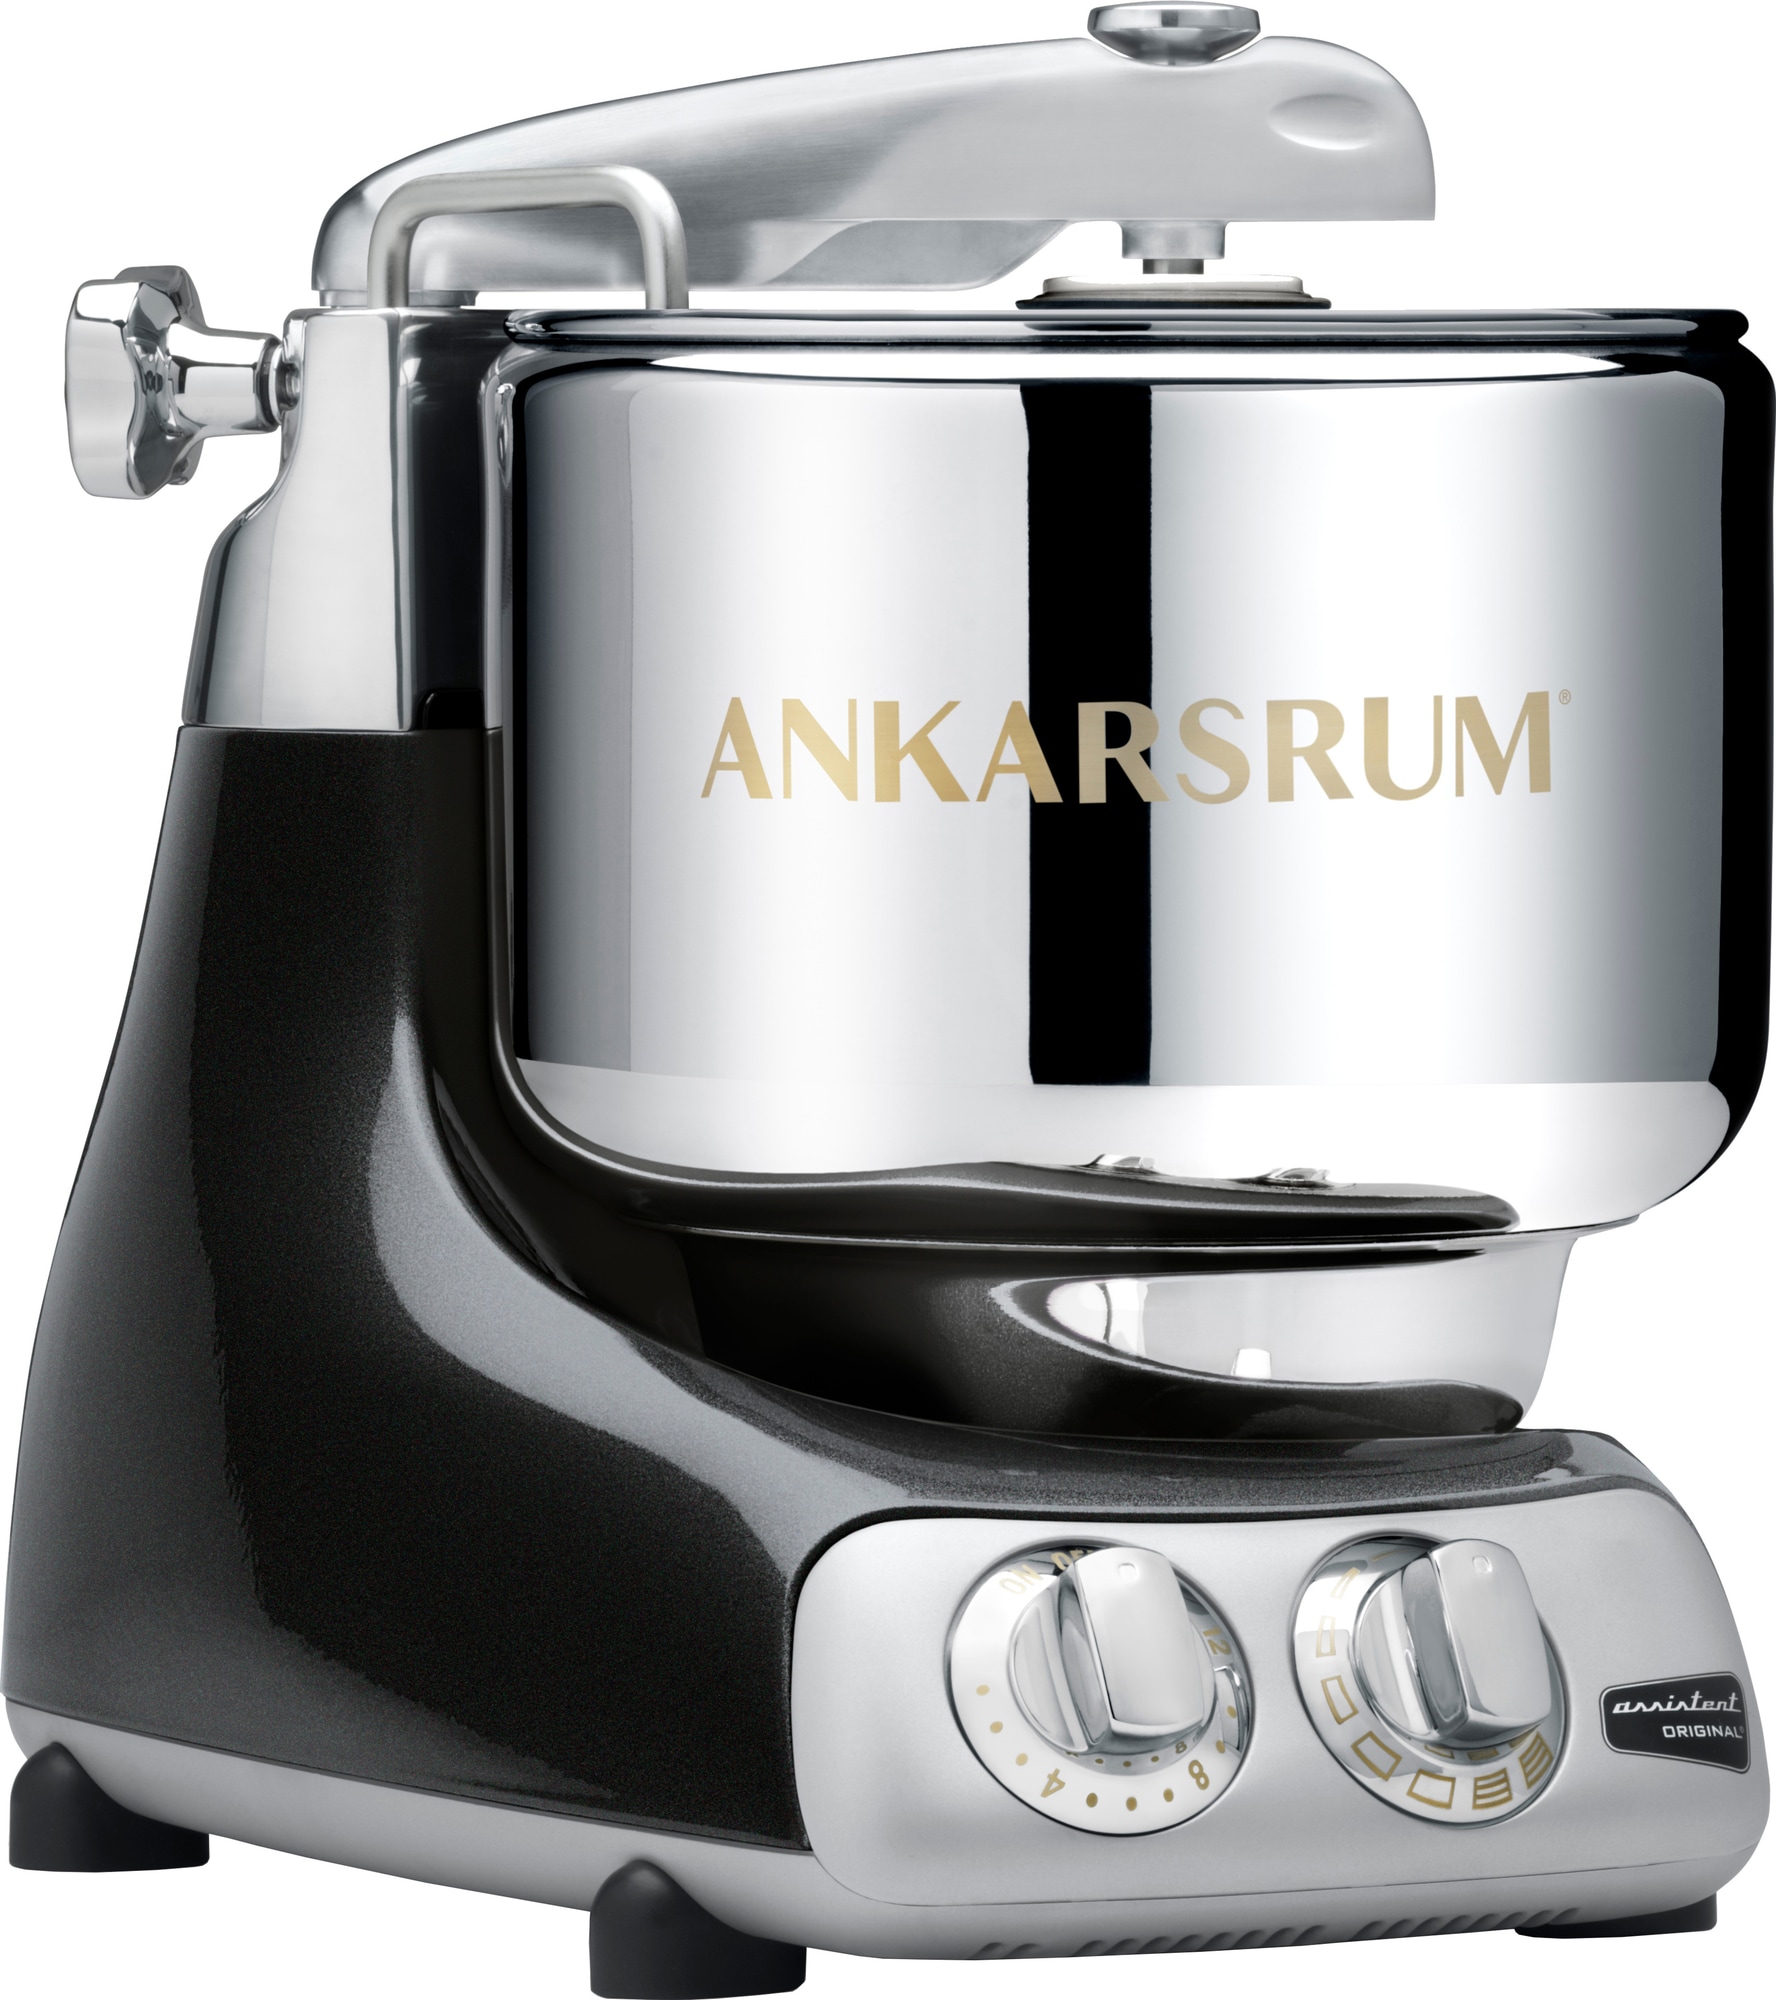 Køb Ankarsrum Black Diamond køkkenmaskine AKM6230 (sort)